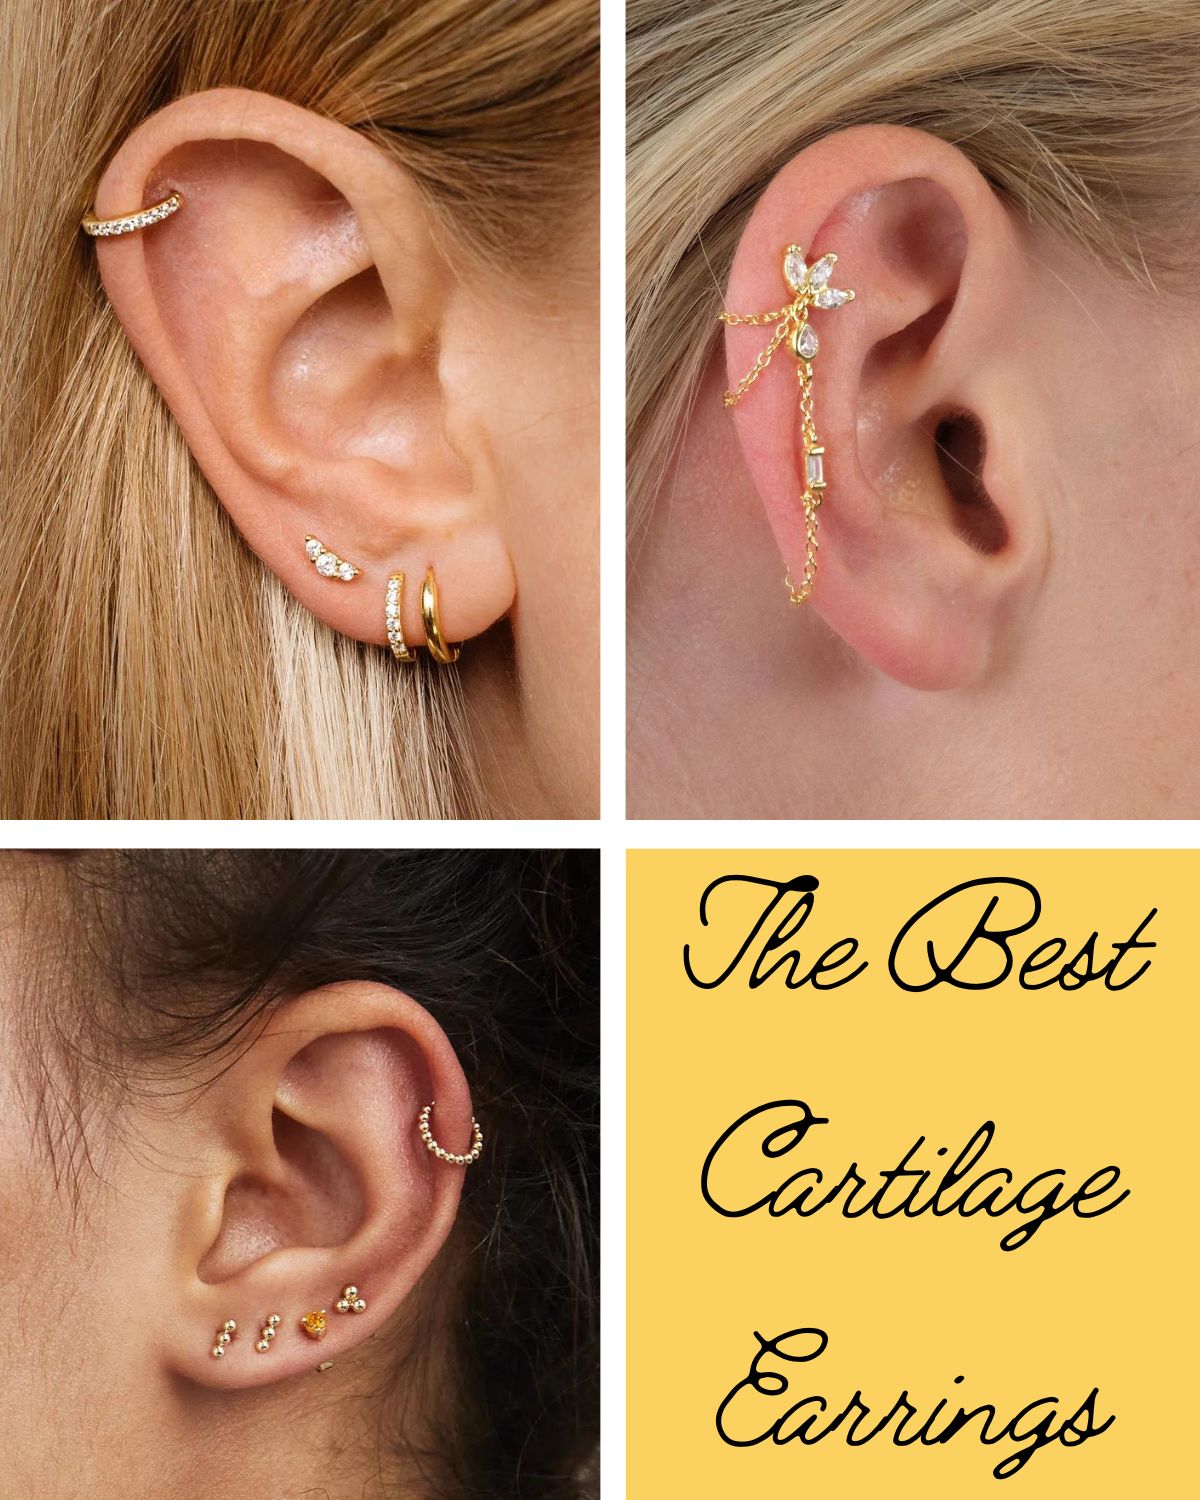 Three girls with ears full of earrings